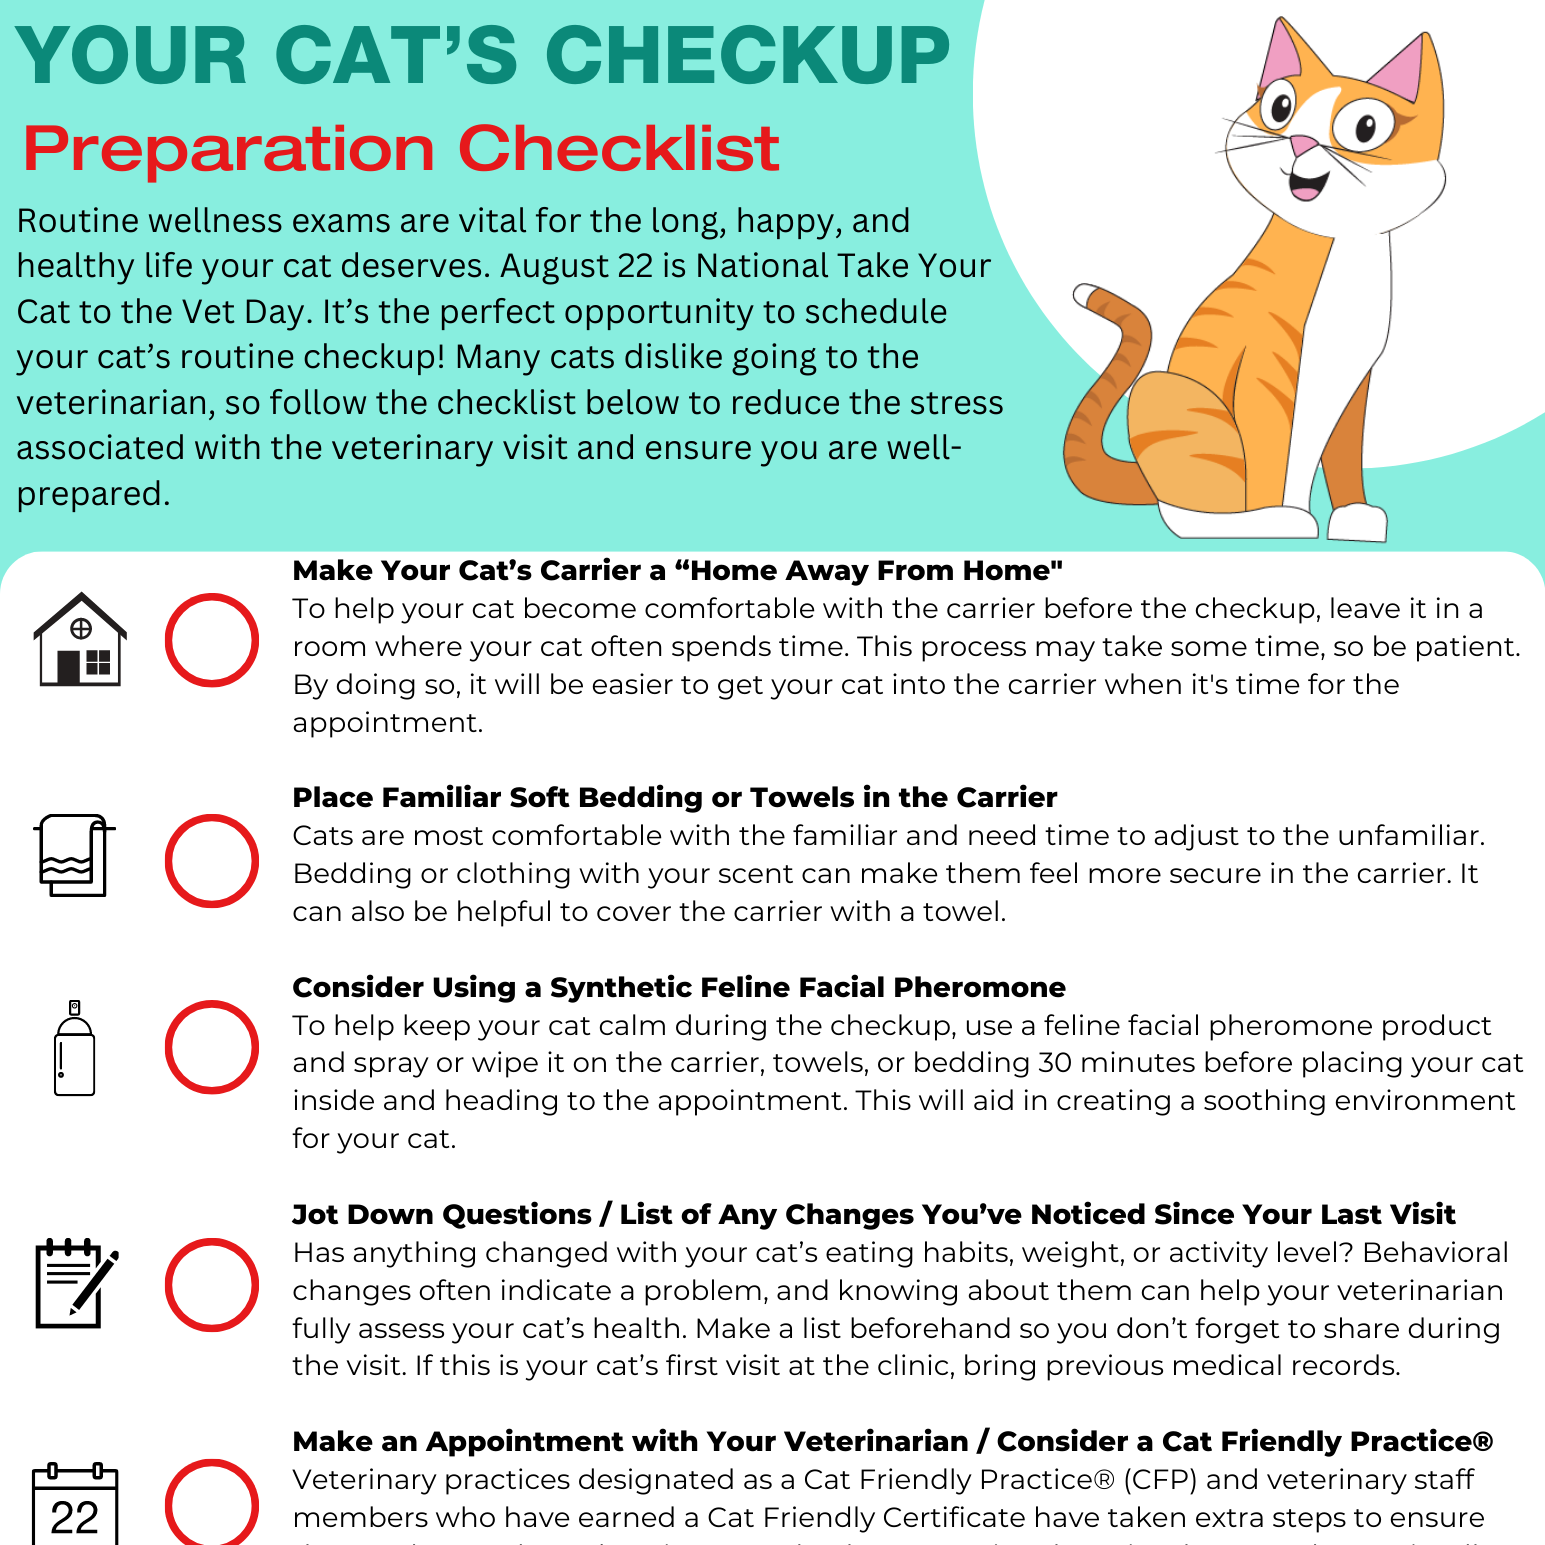 Your Cat's Checkup Checklist